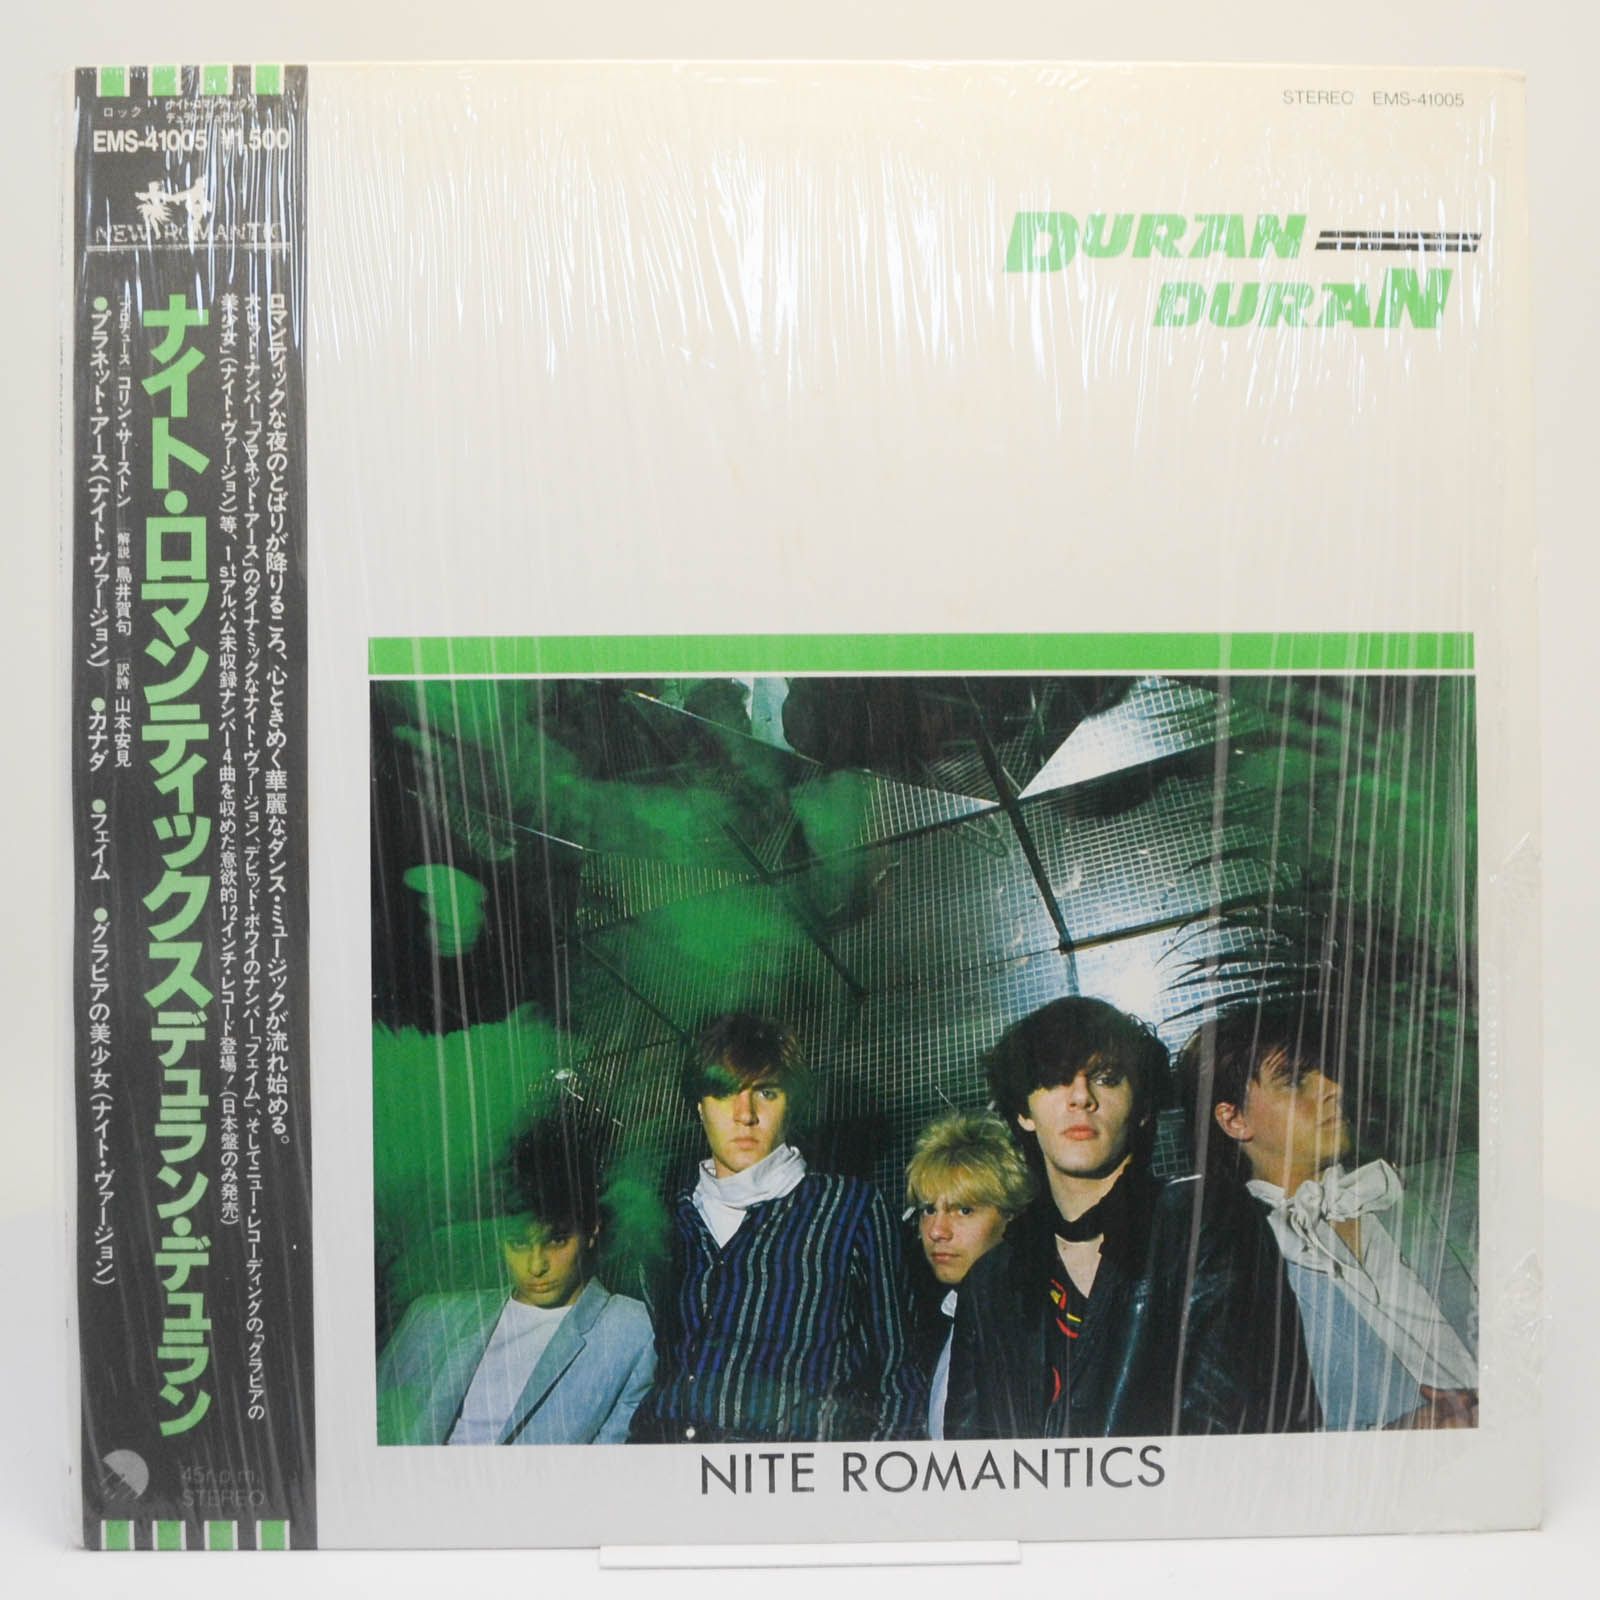 Duran Duran — Nite Romantics, 1981